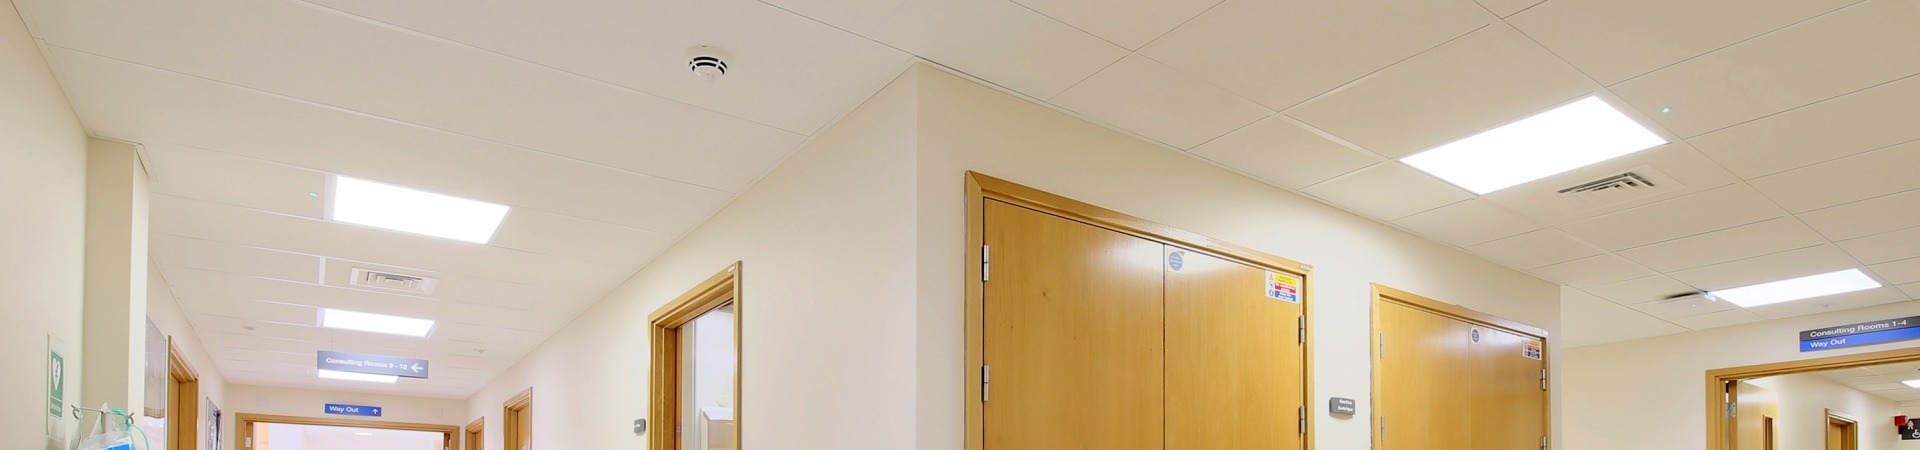 Tamlite Hinchingbrooke Hospital Healthcare LED Lighting case study header